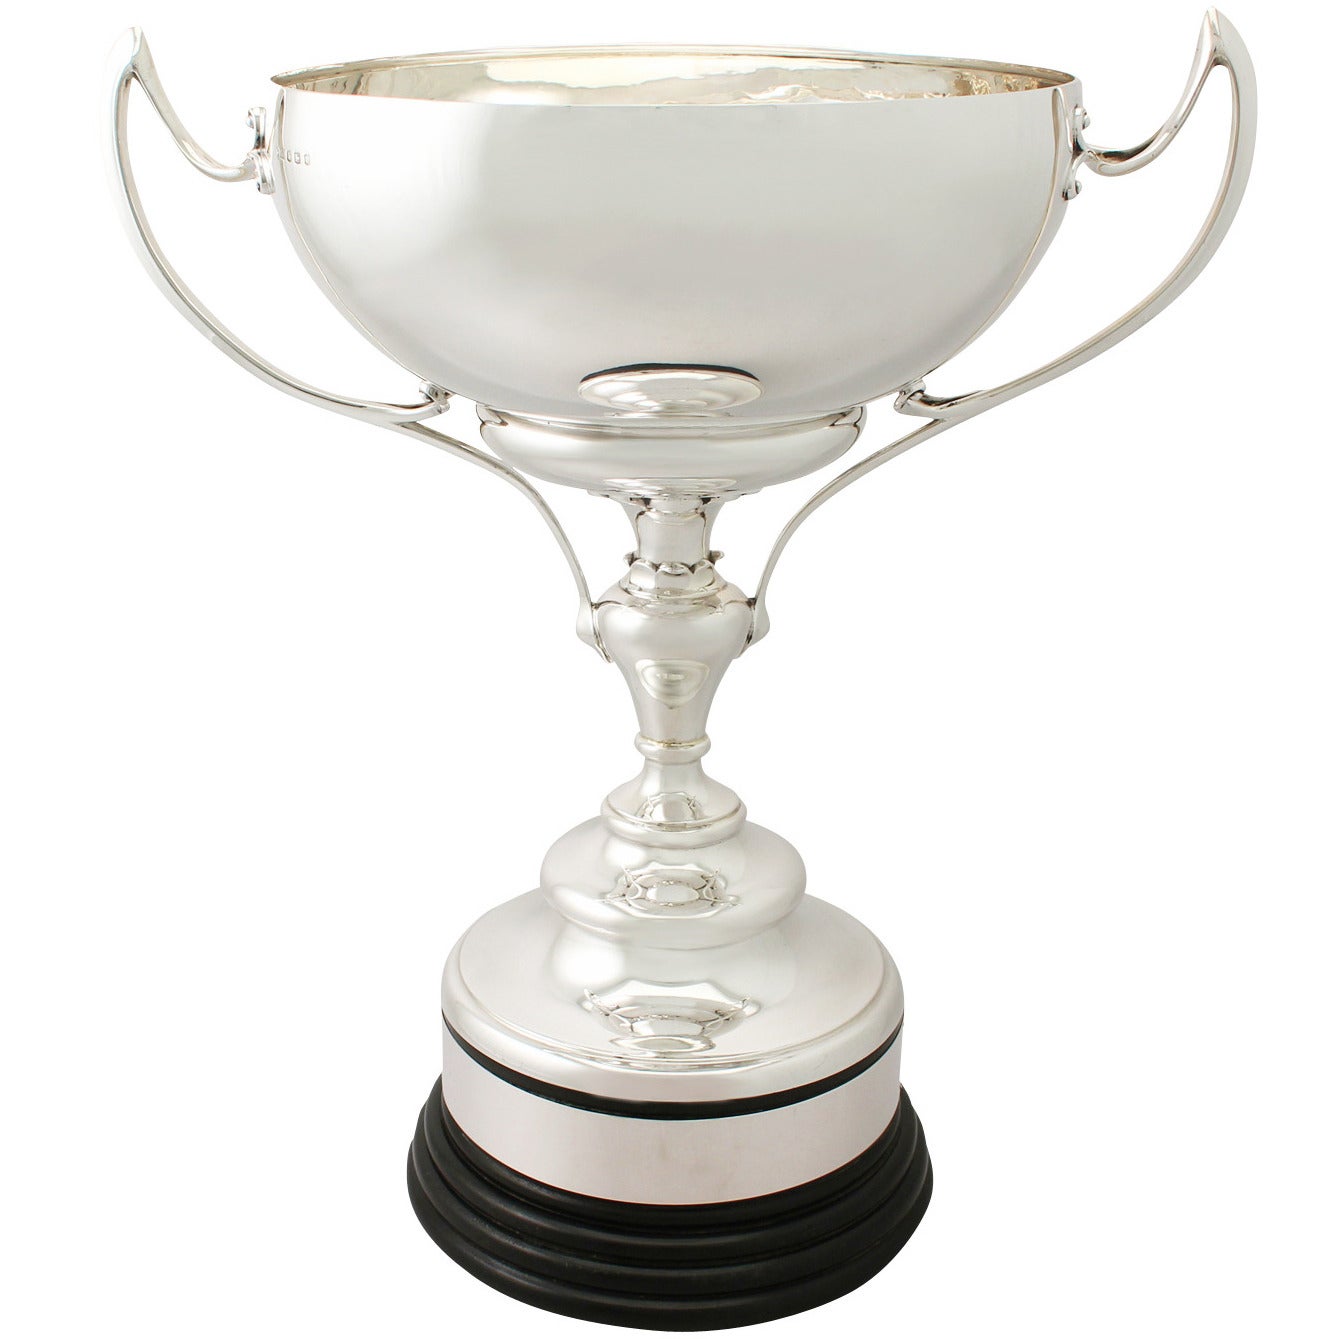 Sterling Silver Presentation Cup/Bowl - Art Nouveau Style - Antique George V